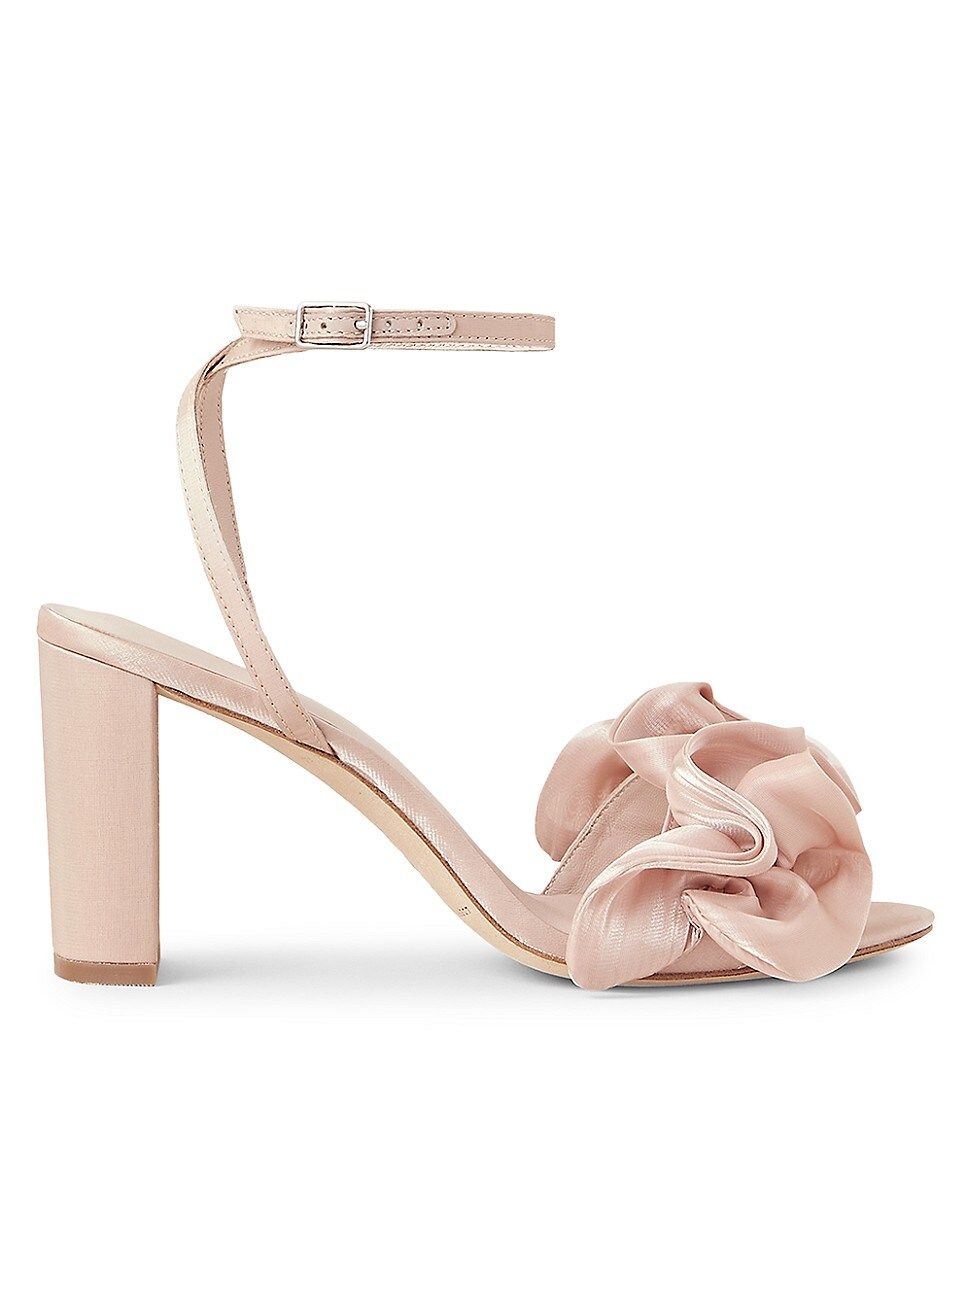 Loeffler Randall Women's Sandra Ruffle Satin Sandals - Pink - Size 11 | Saks Fifth Avenue